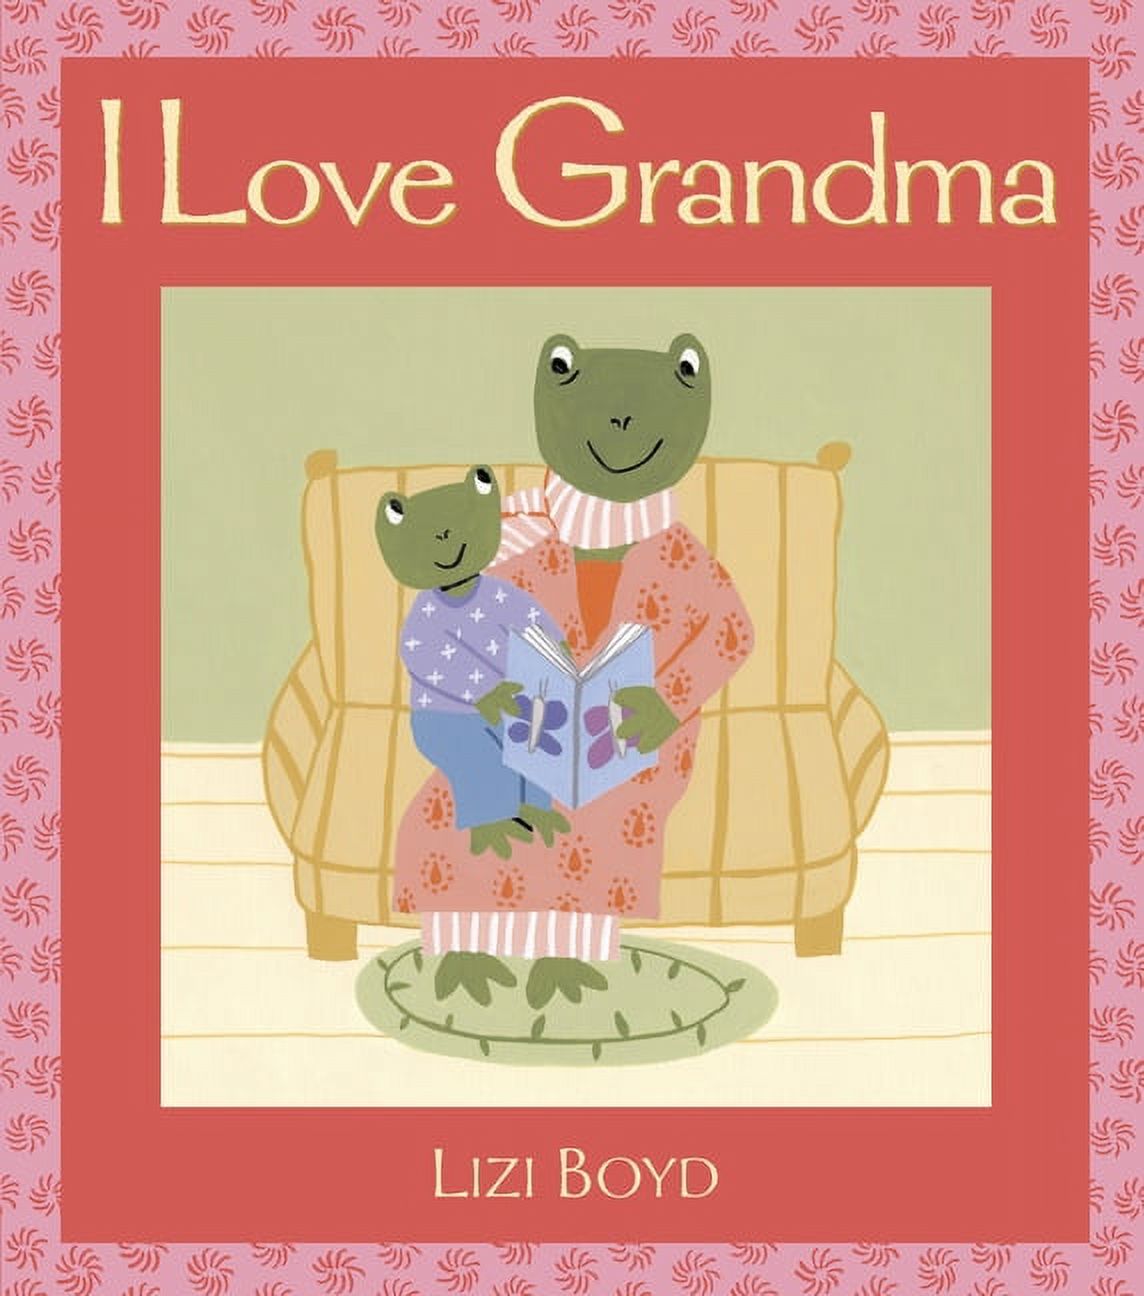 Super Sturdy Picture Books: I Love Grandma: Super Sturdy Picture Books (Hardcover) - image 1 of 1